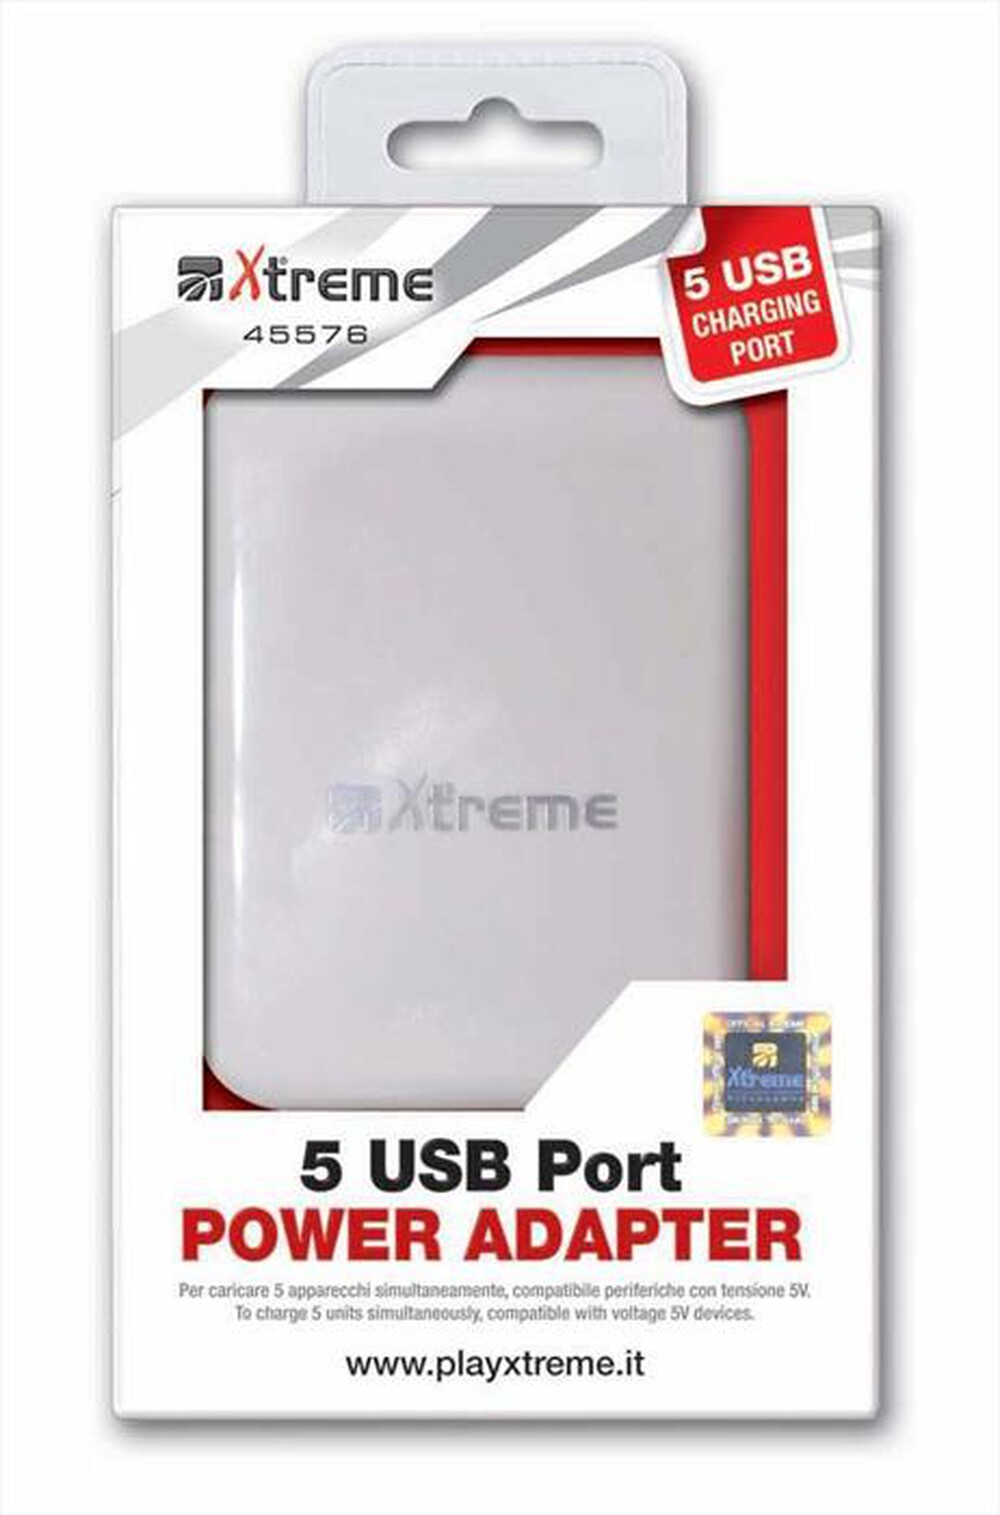 "XTREME - 45576 - Alimentatore USB 5 porte rete"